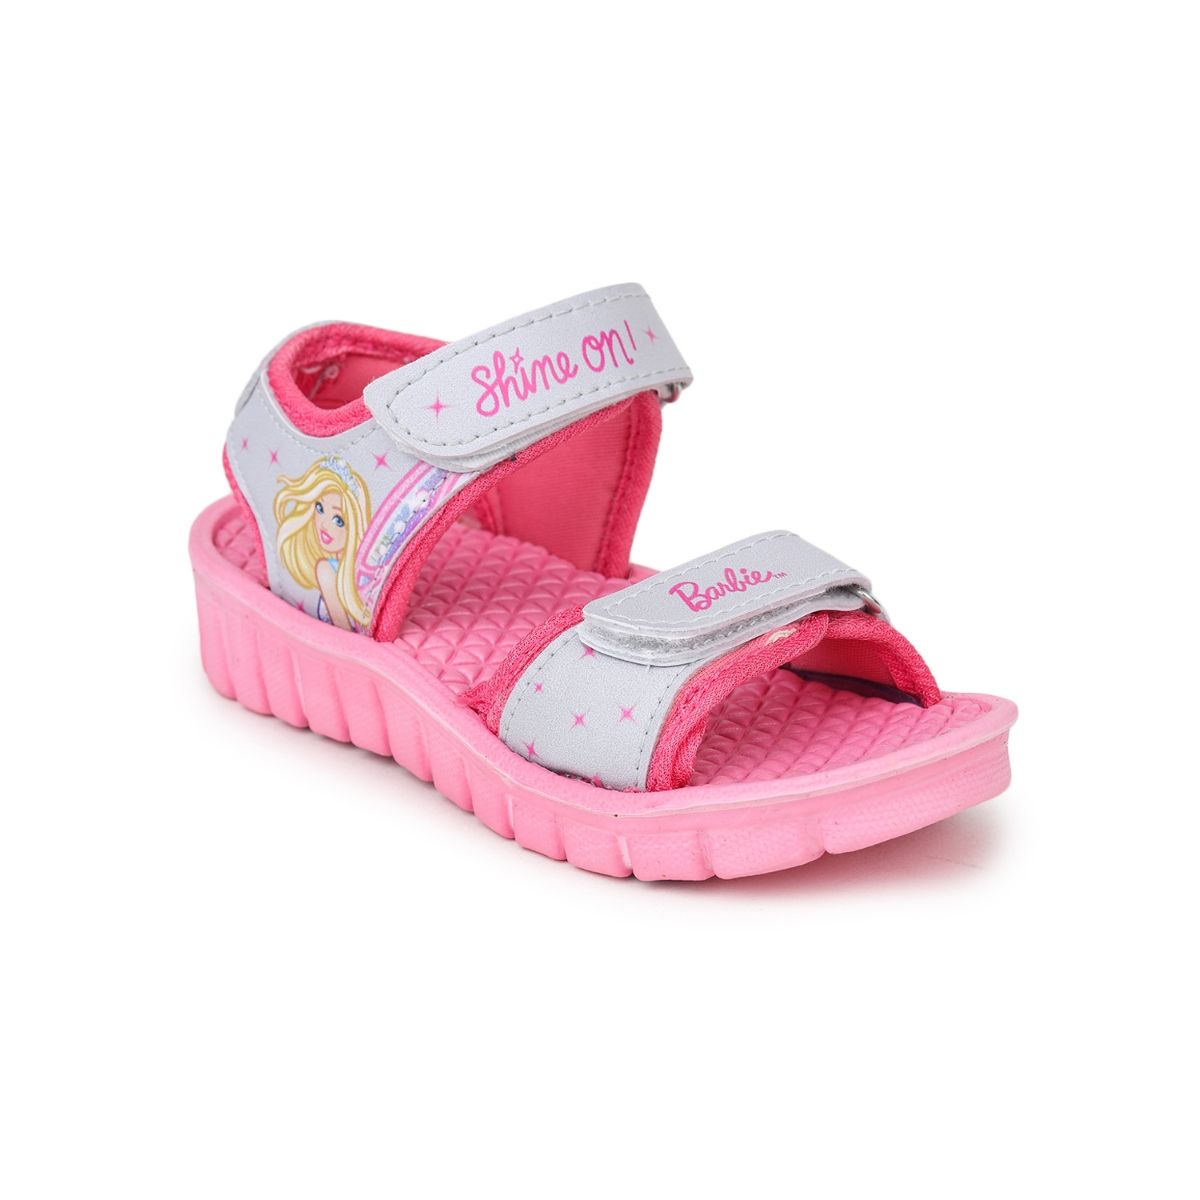 Barbie Girls Pink Walking Shoes8 Kids UKIndia 26 EU  STY1819000727 Buy Online at Low Prices in India  Amazonin